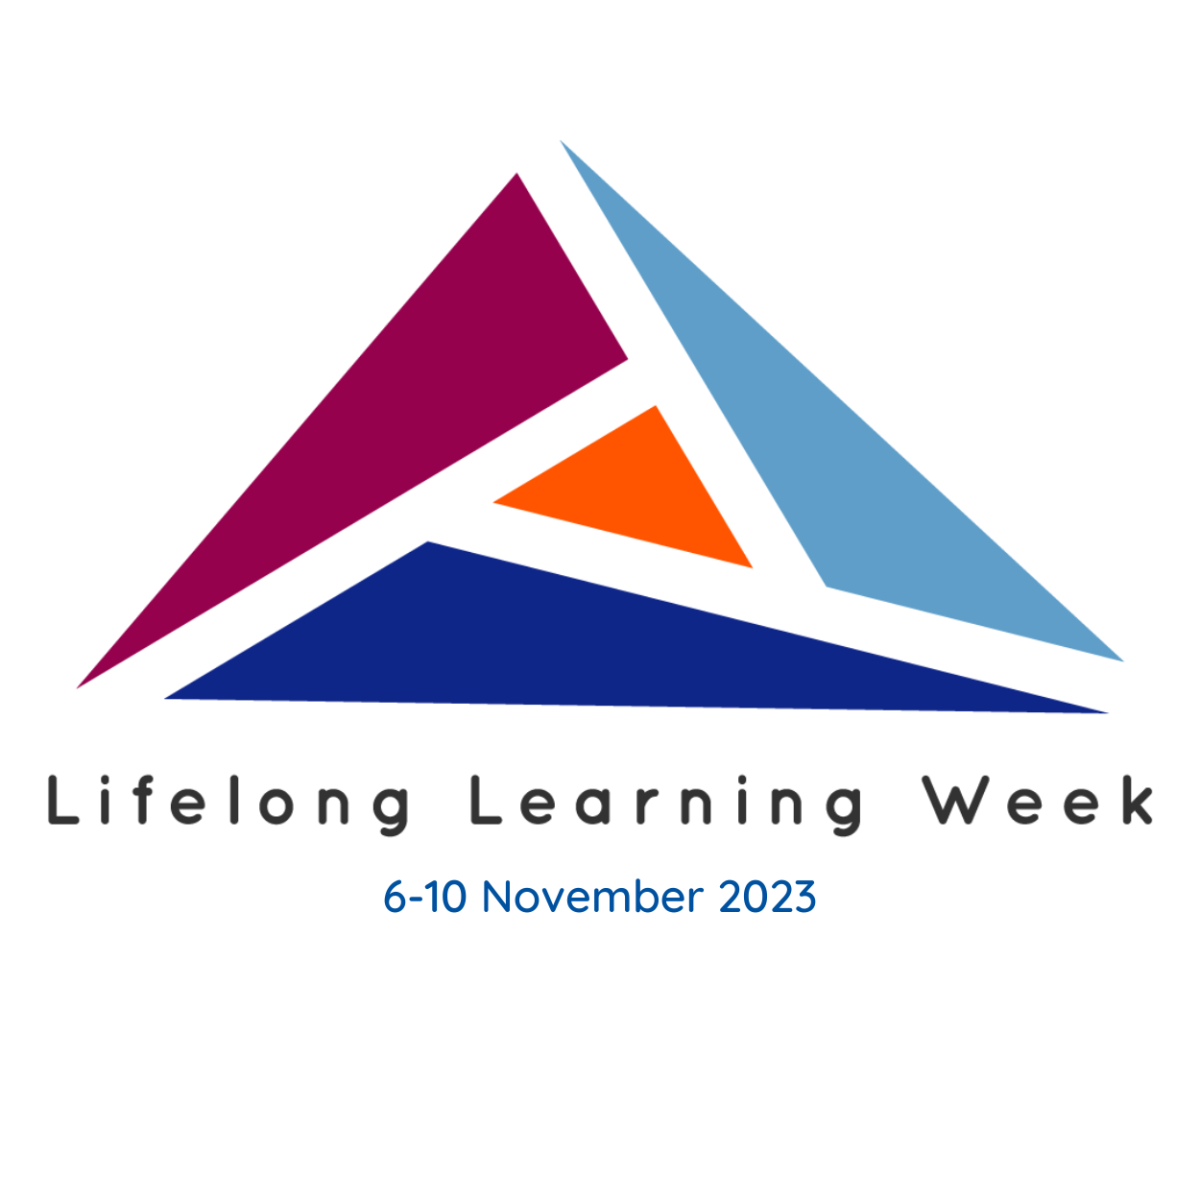 Lifelong Learning Week logo